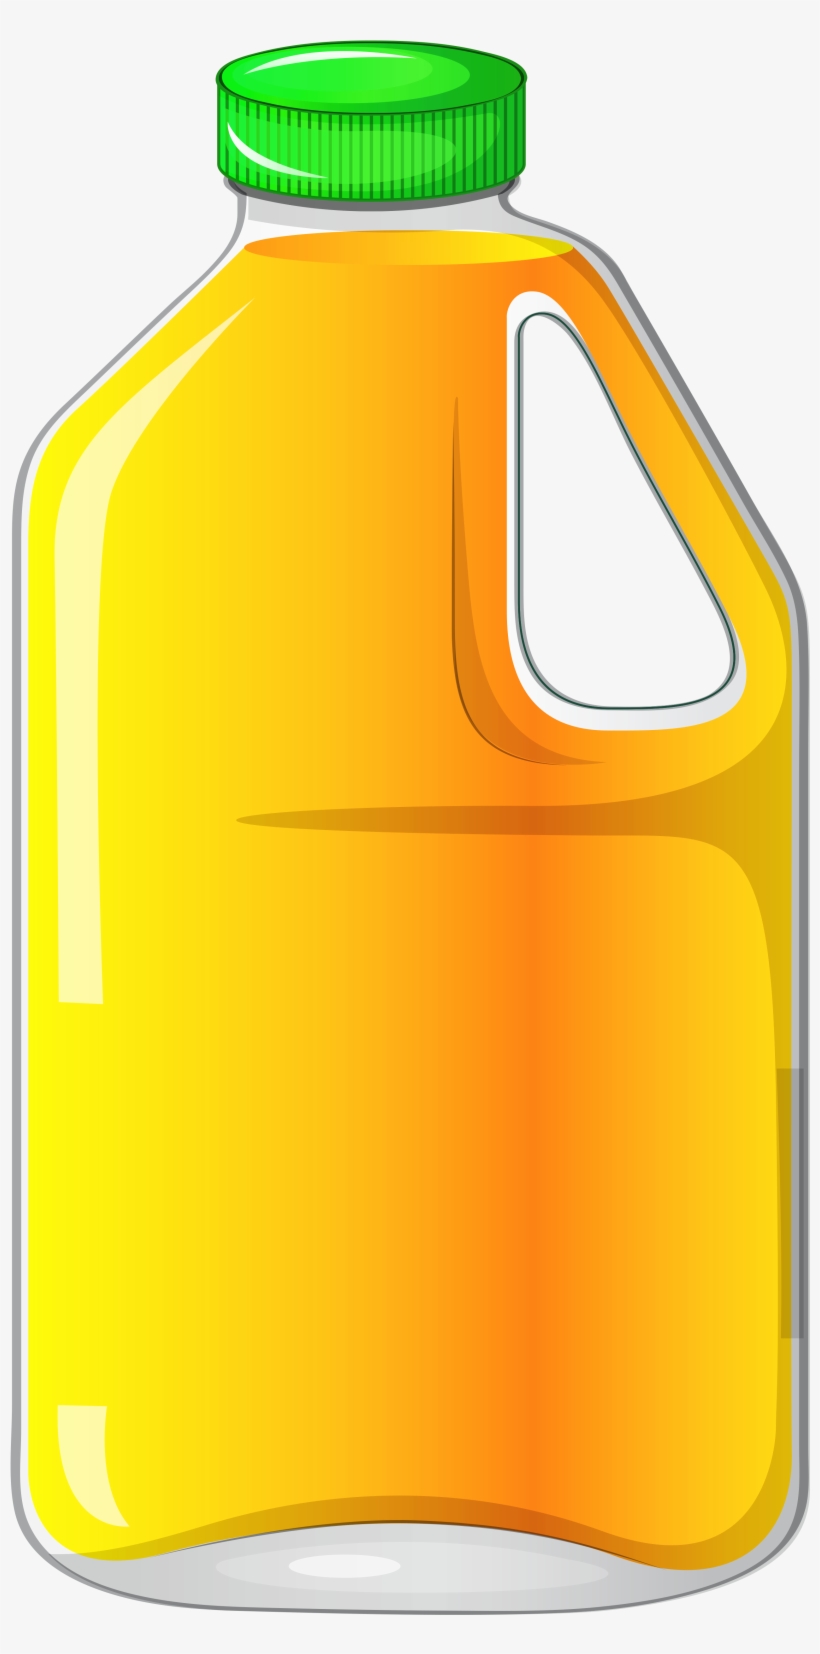 Orange Juice Smoothie Apple Juice Clip Art Png X Px Juice